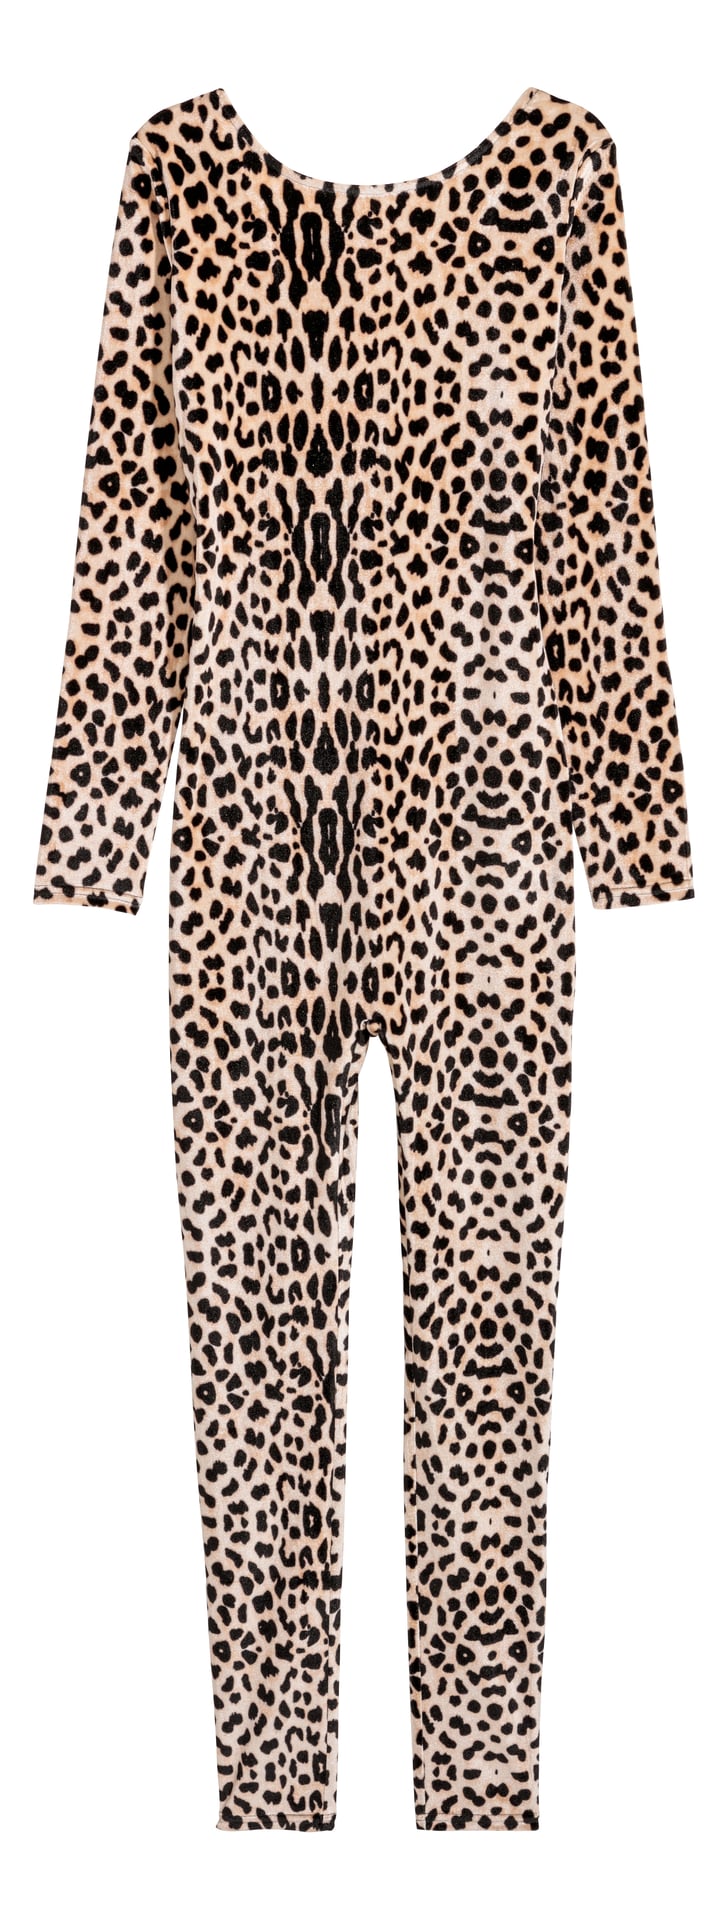 Velour Leopard Costume ($30) | H&M Halloween Costumes 2017 | POPSUGAR ...